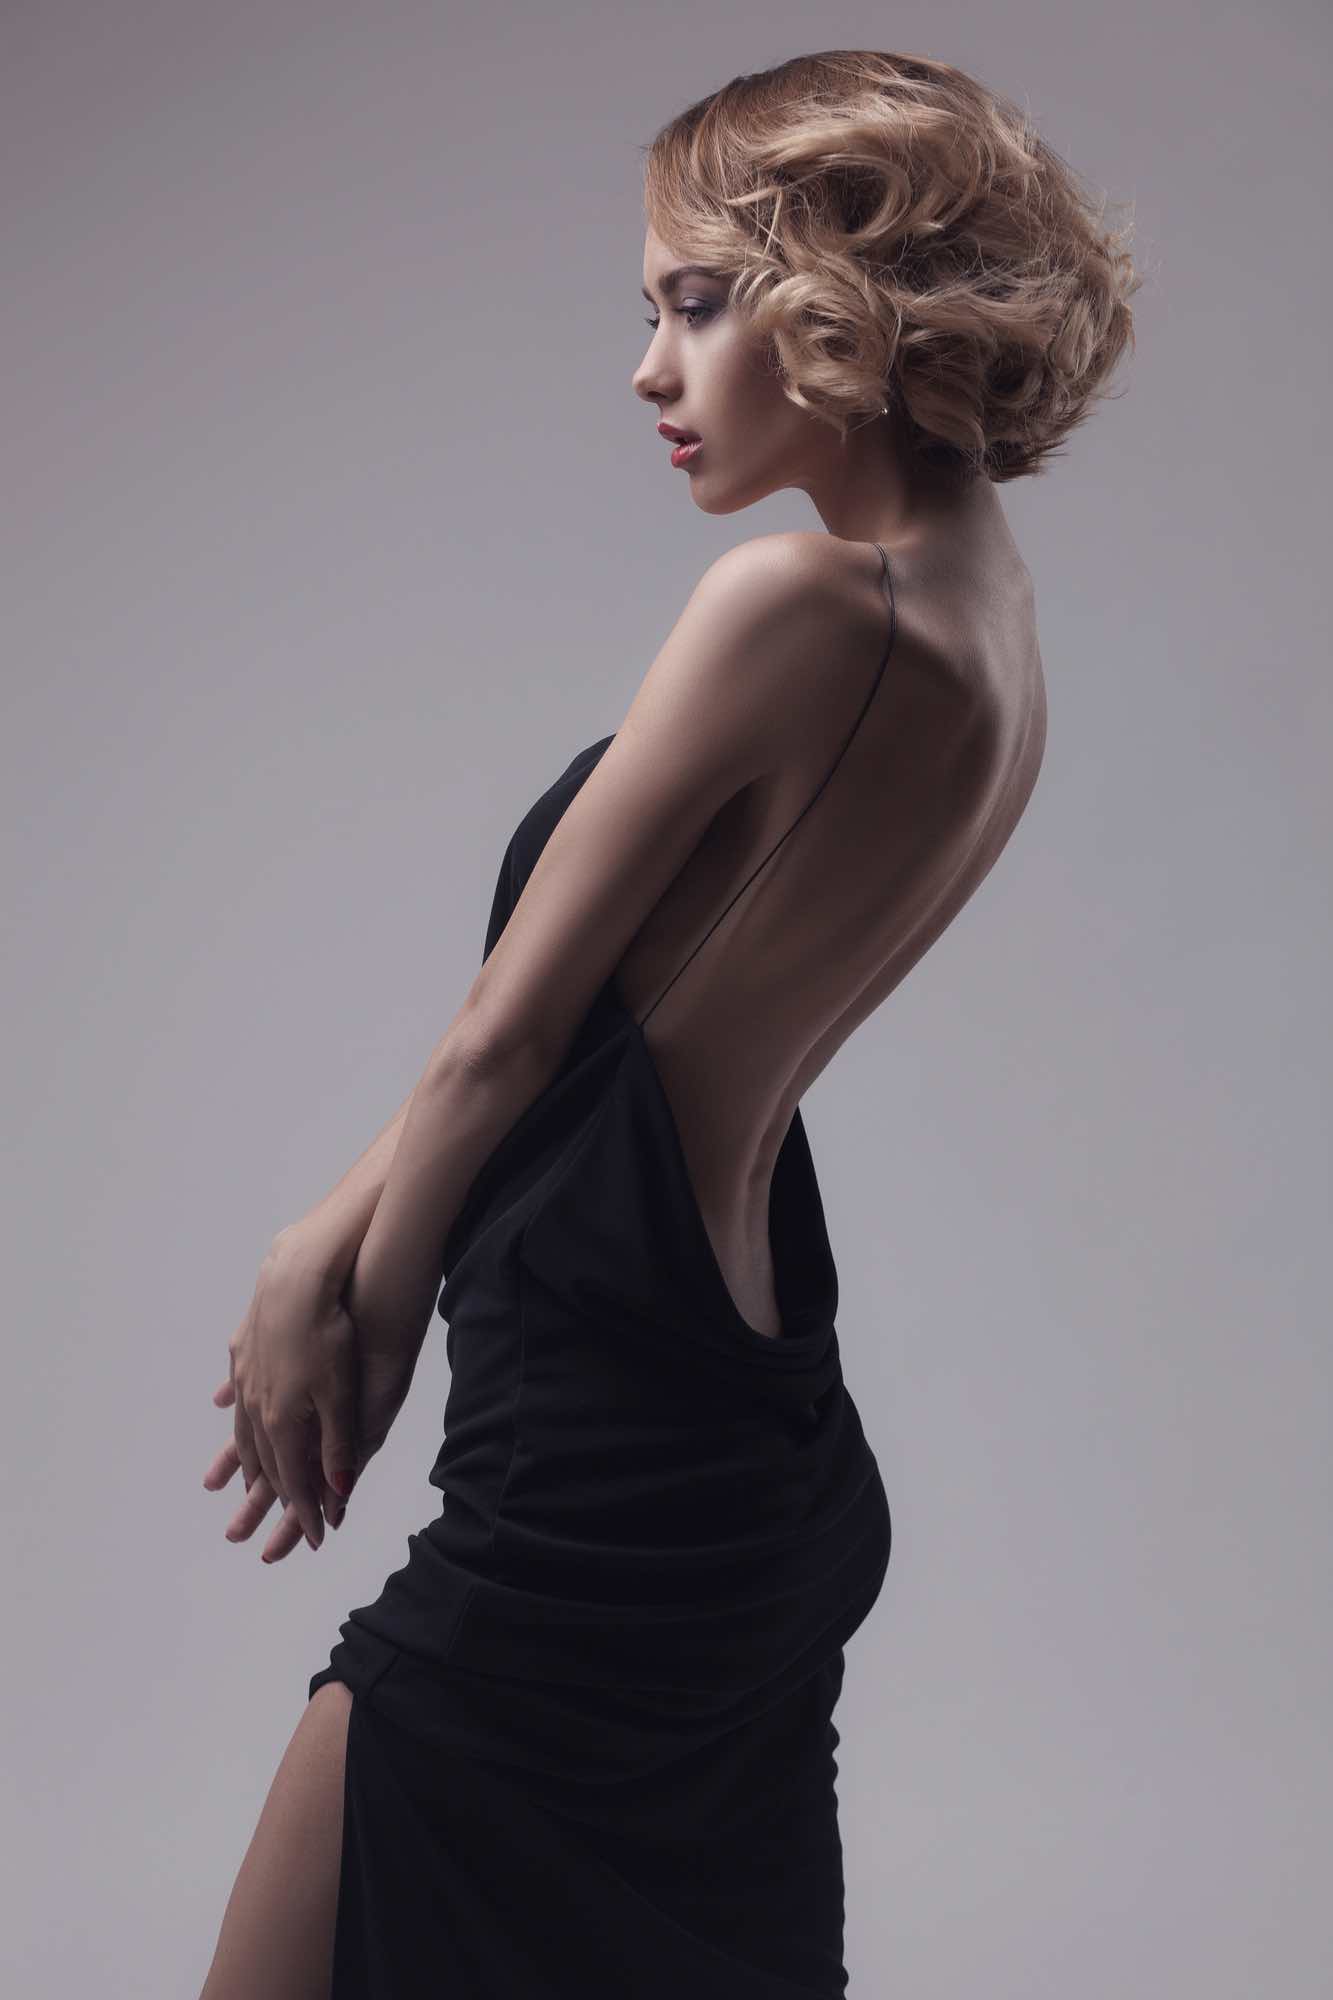 beautiful woman model posing in elegant dress